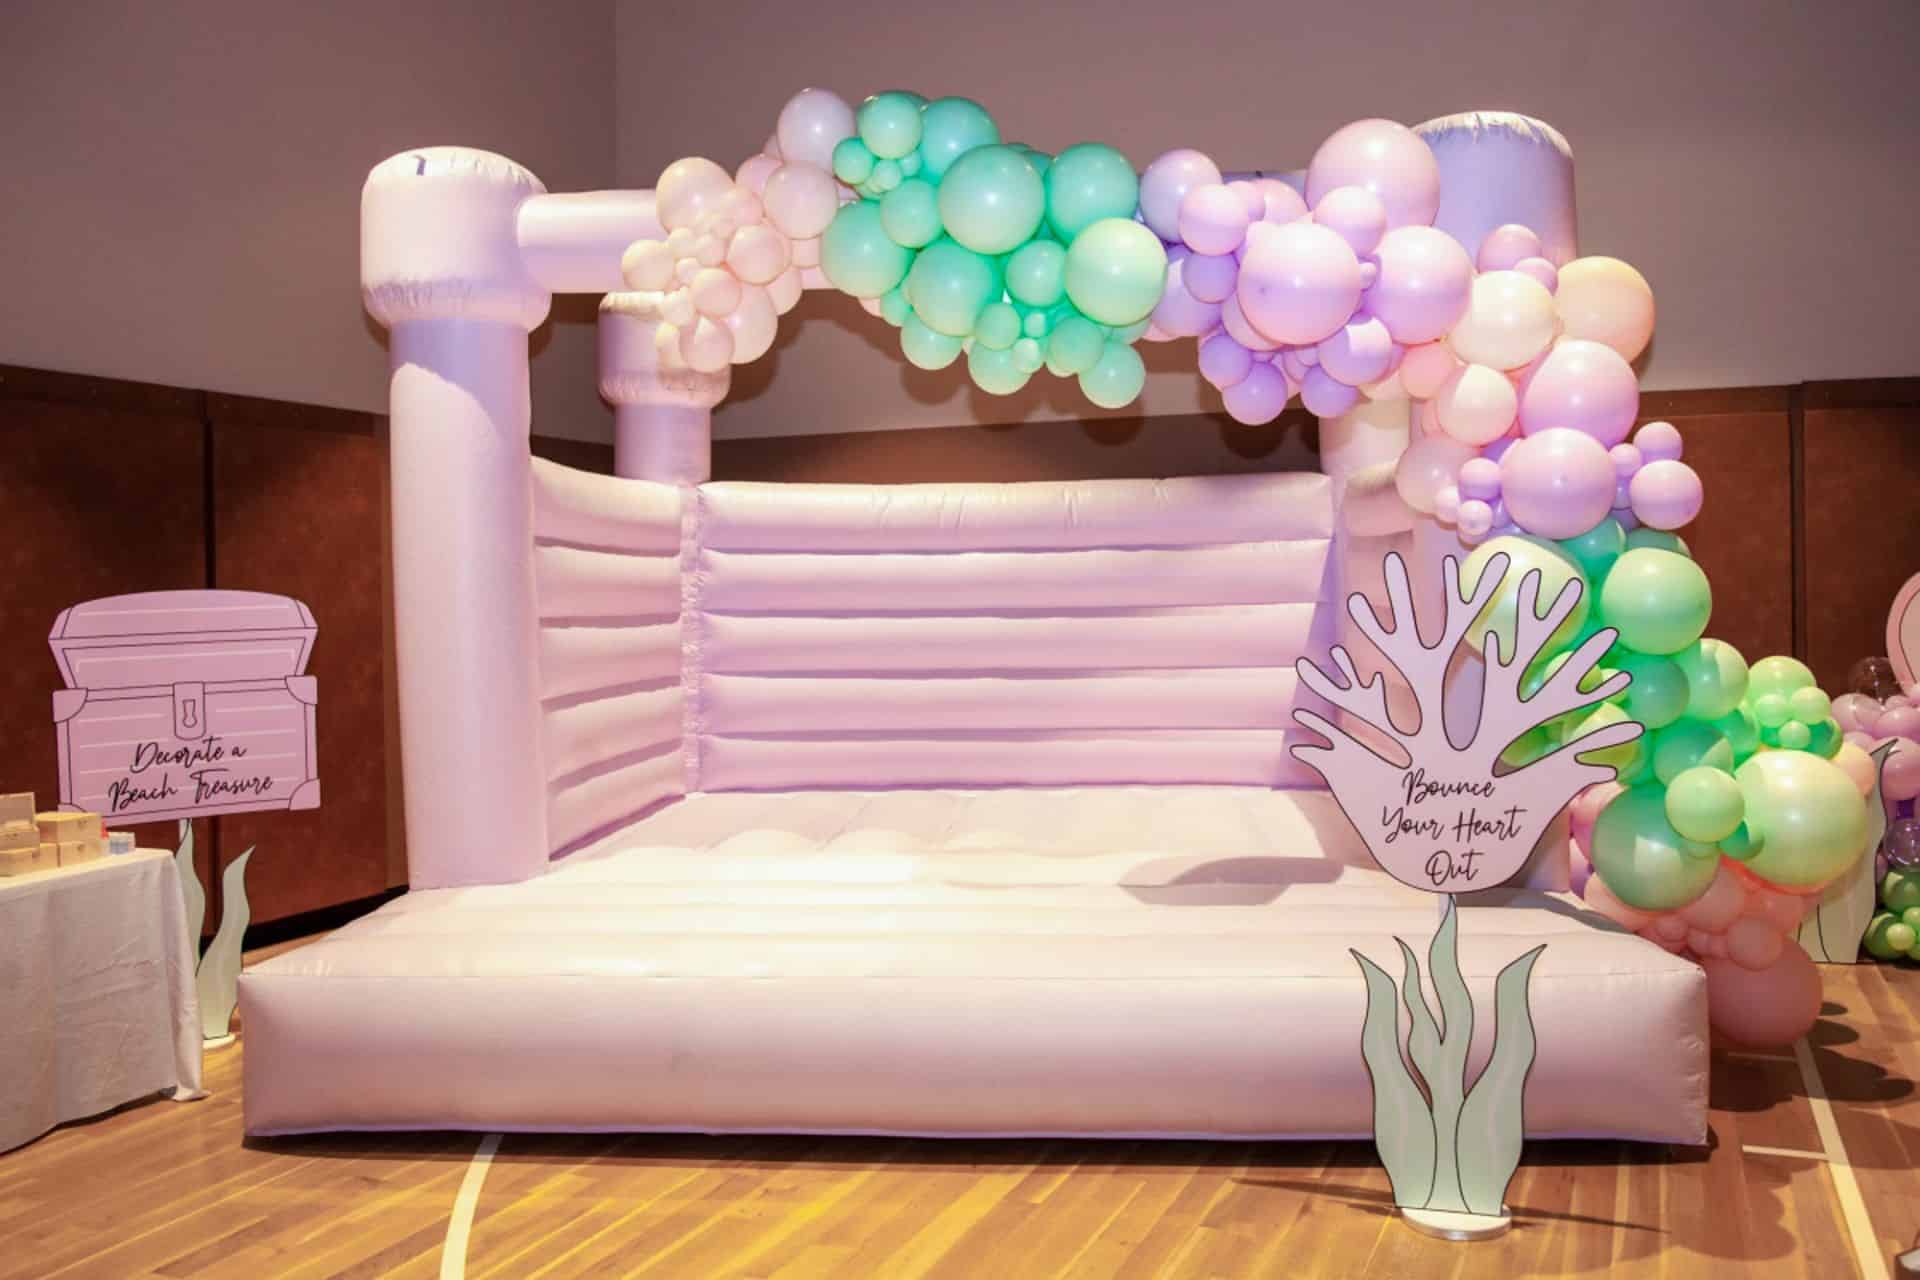 Party Decor Gallery · Balloon Artistry